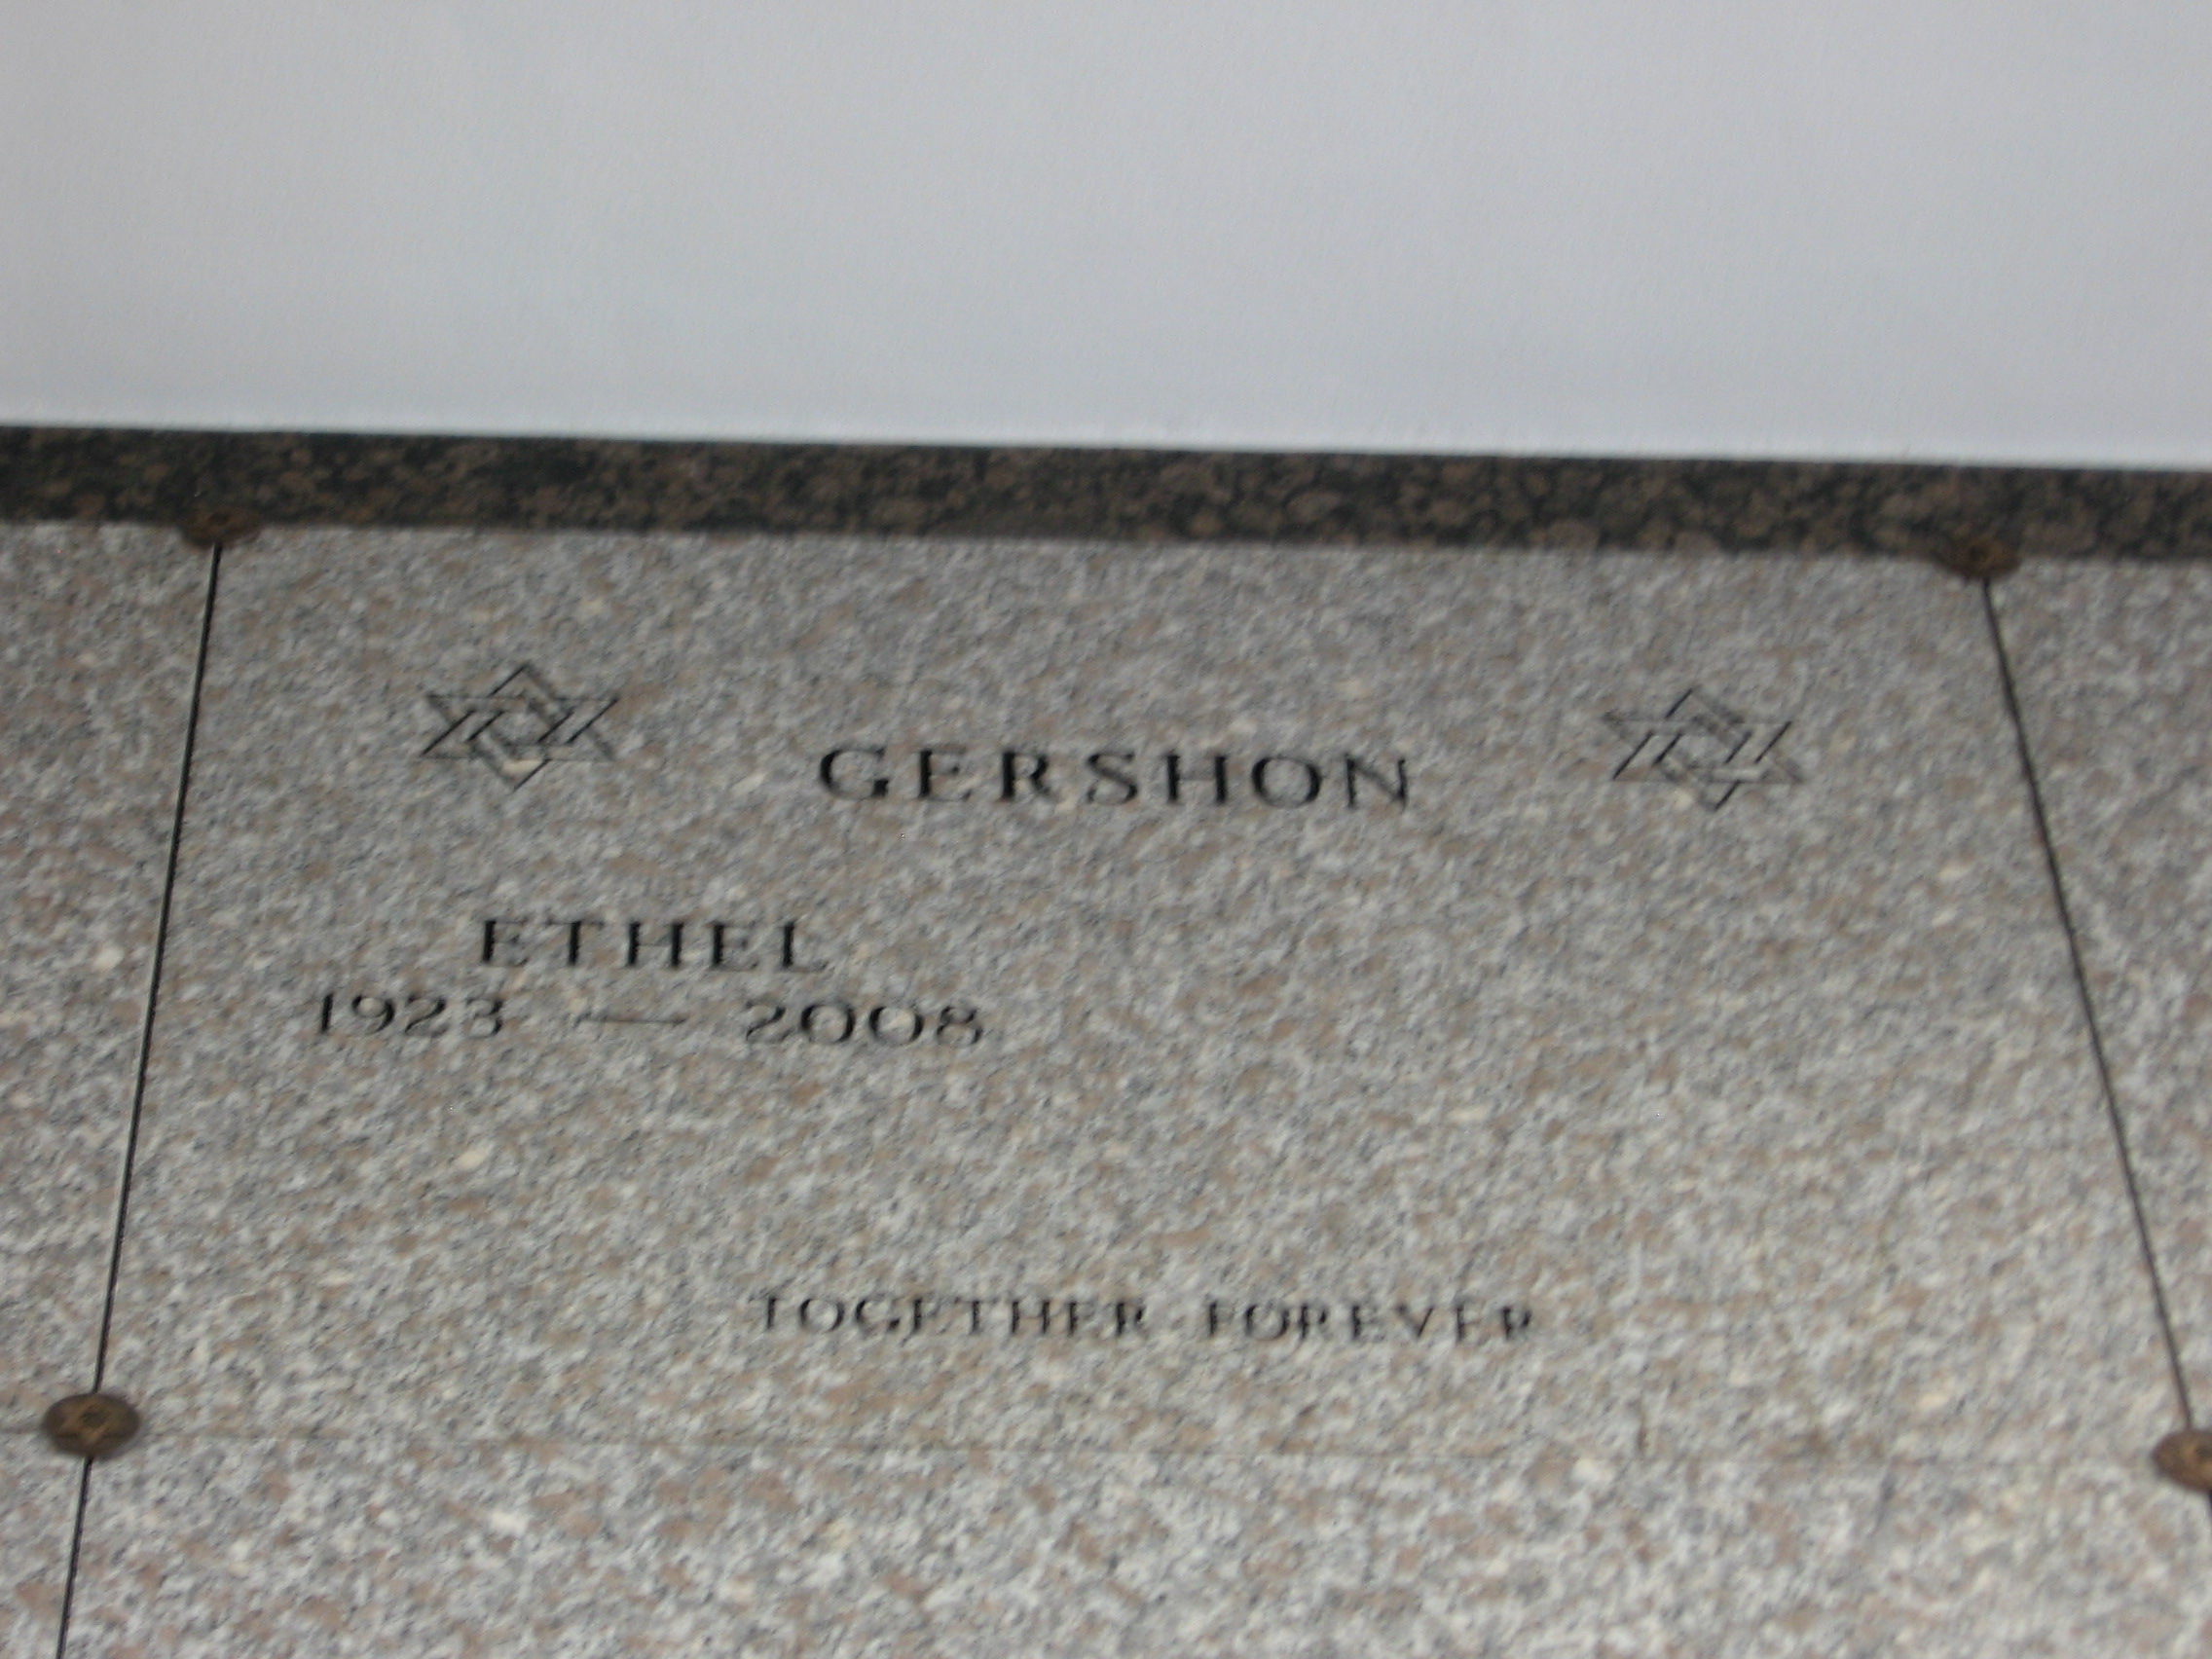 Ethel Gershon